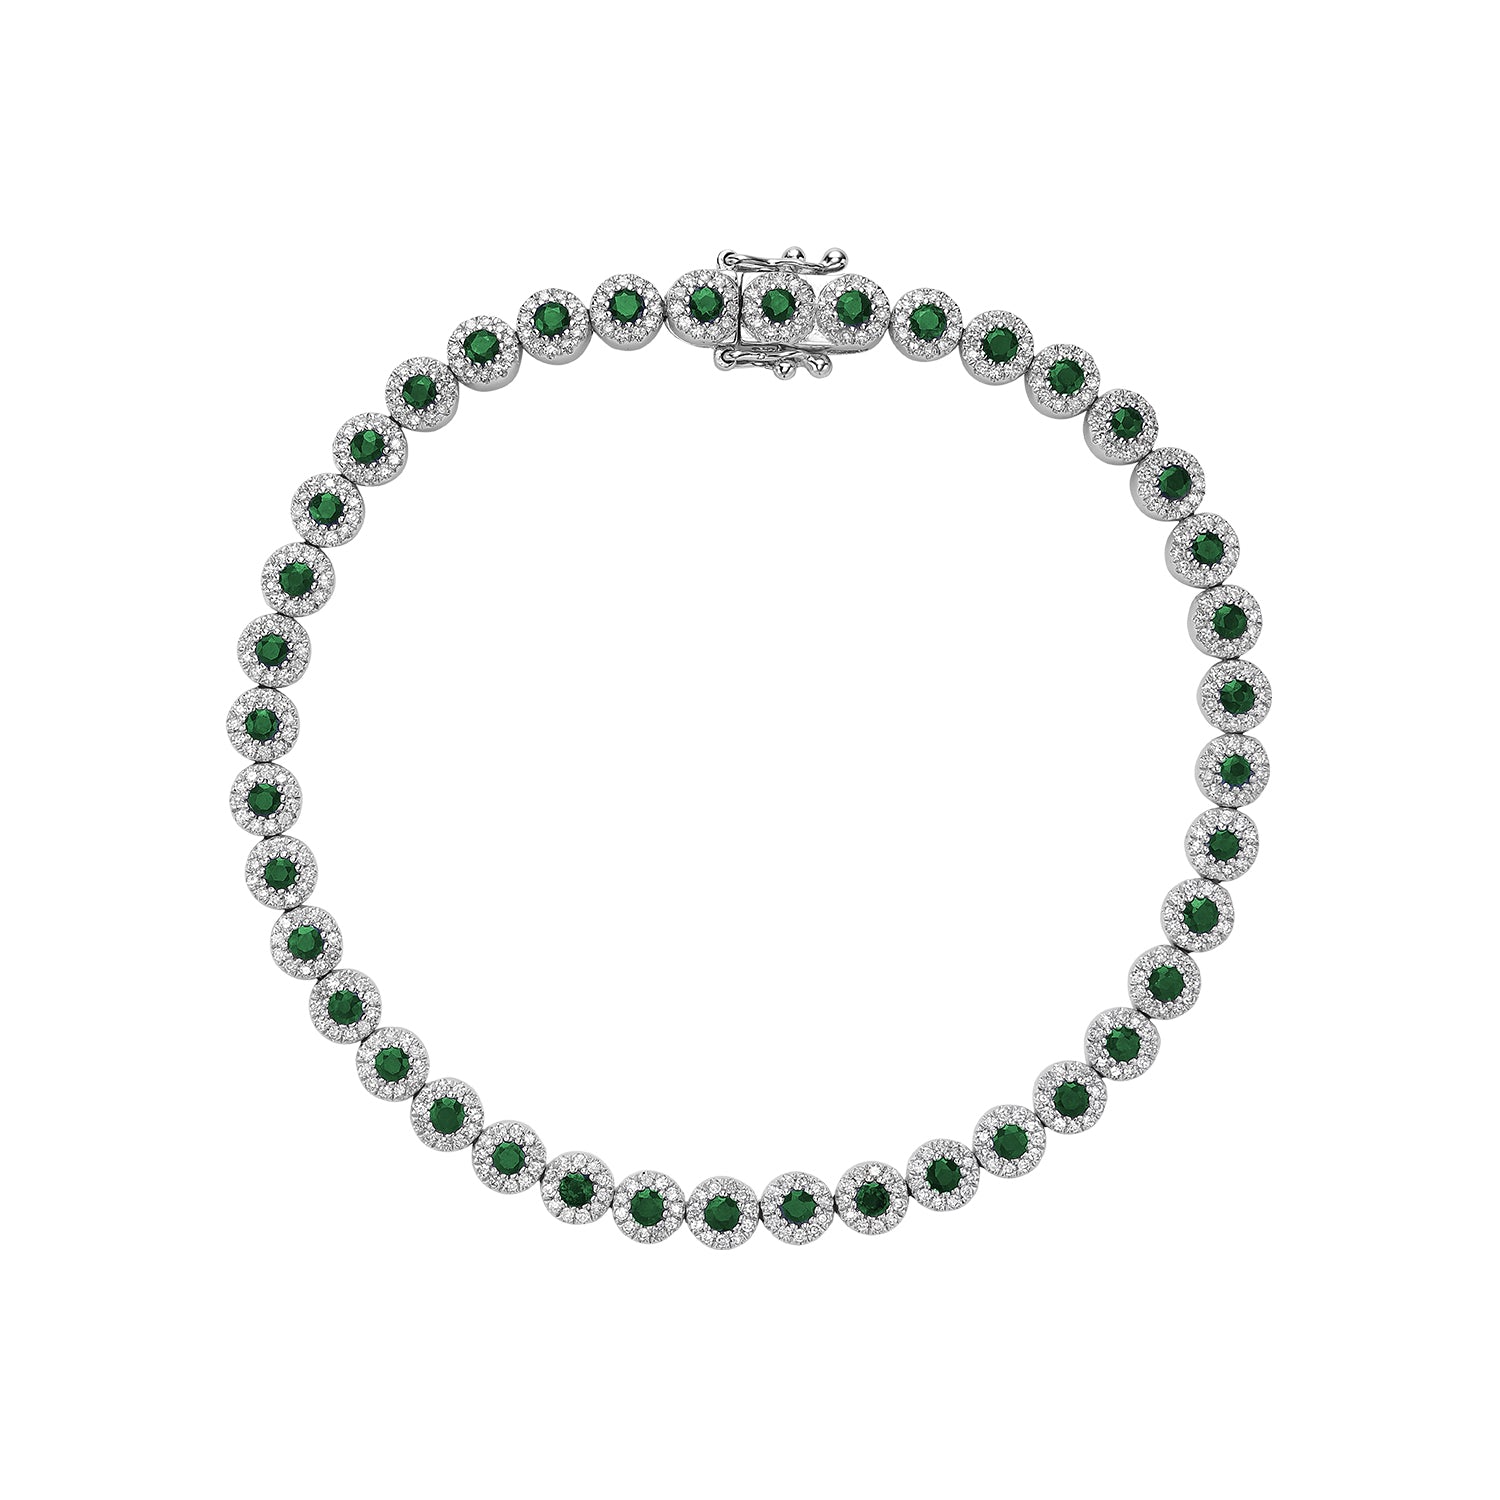 Hemsleys Collection 14KW Round Emerald & Diamond Round Halo Tennis Bracelet